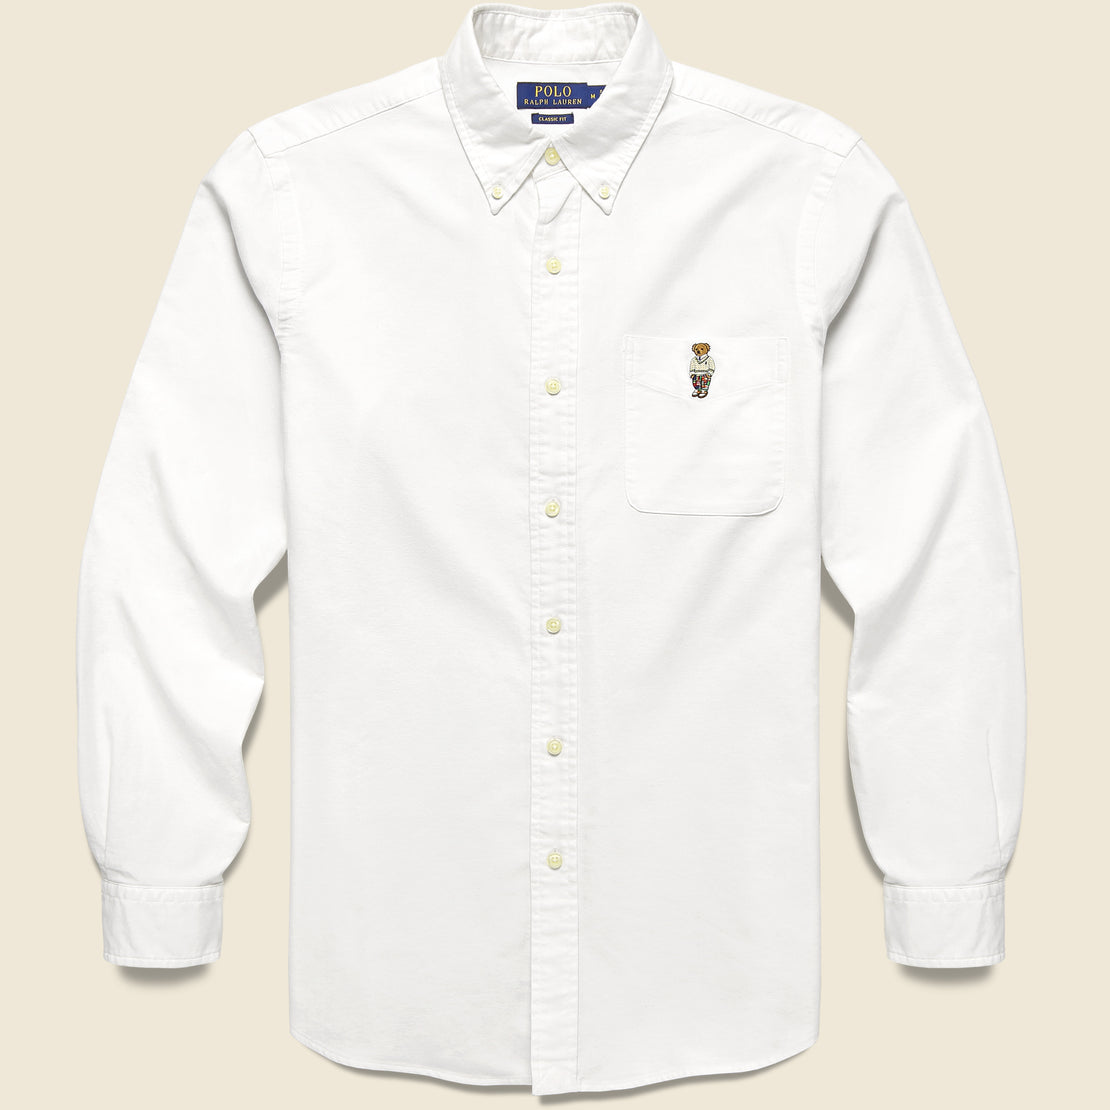 Polo Ralph Lauren Spring Bear Oxford Shirt - White